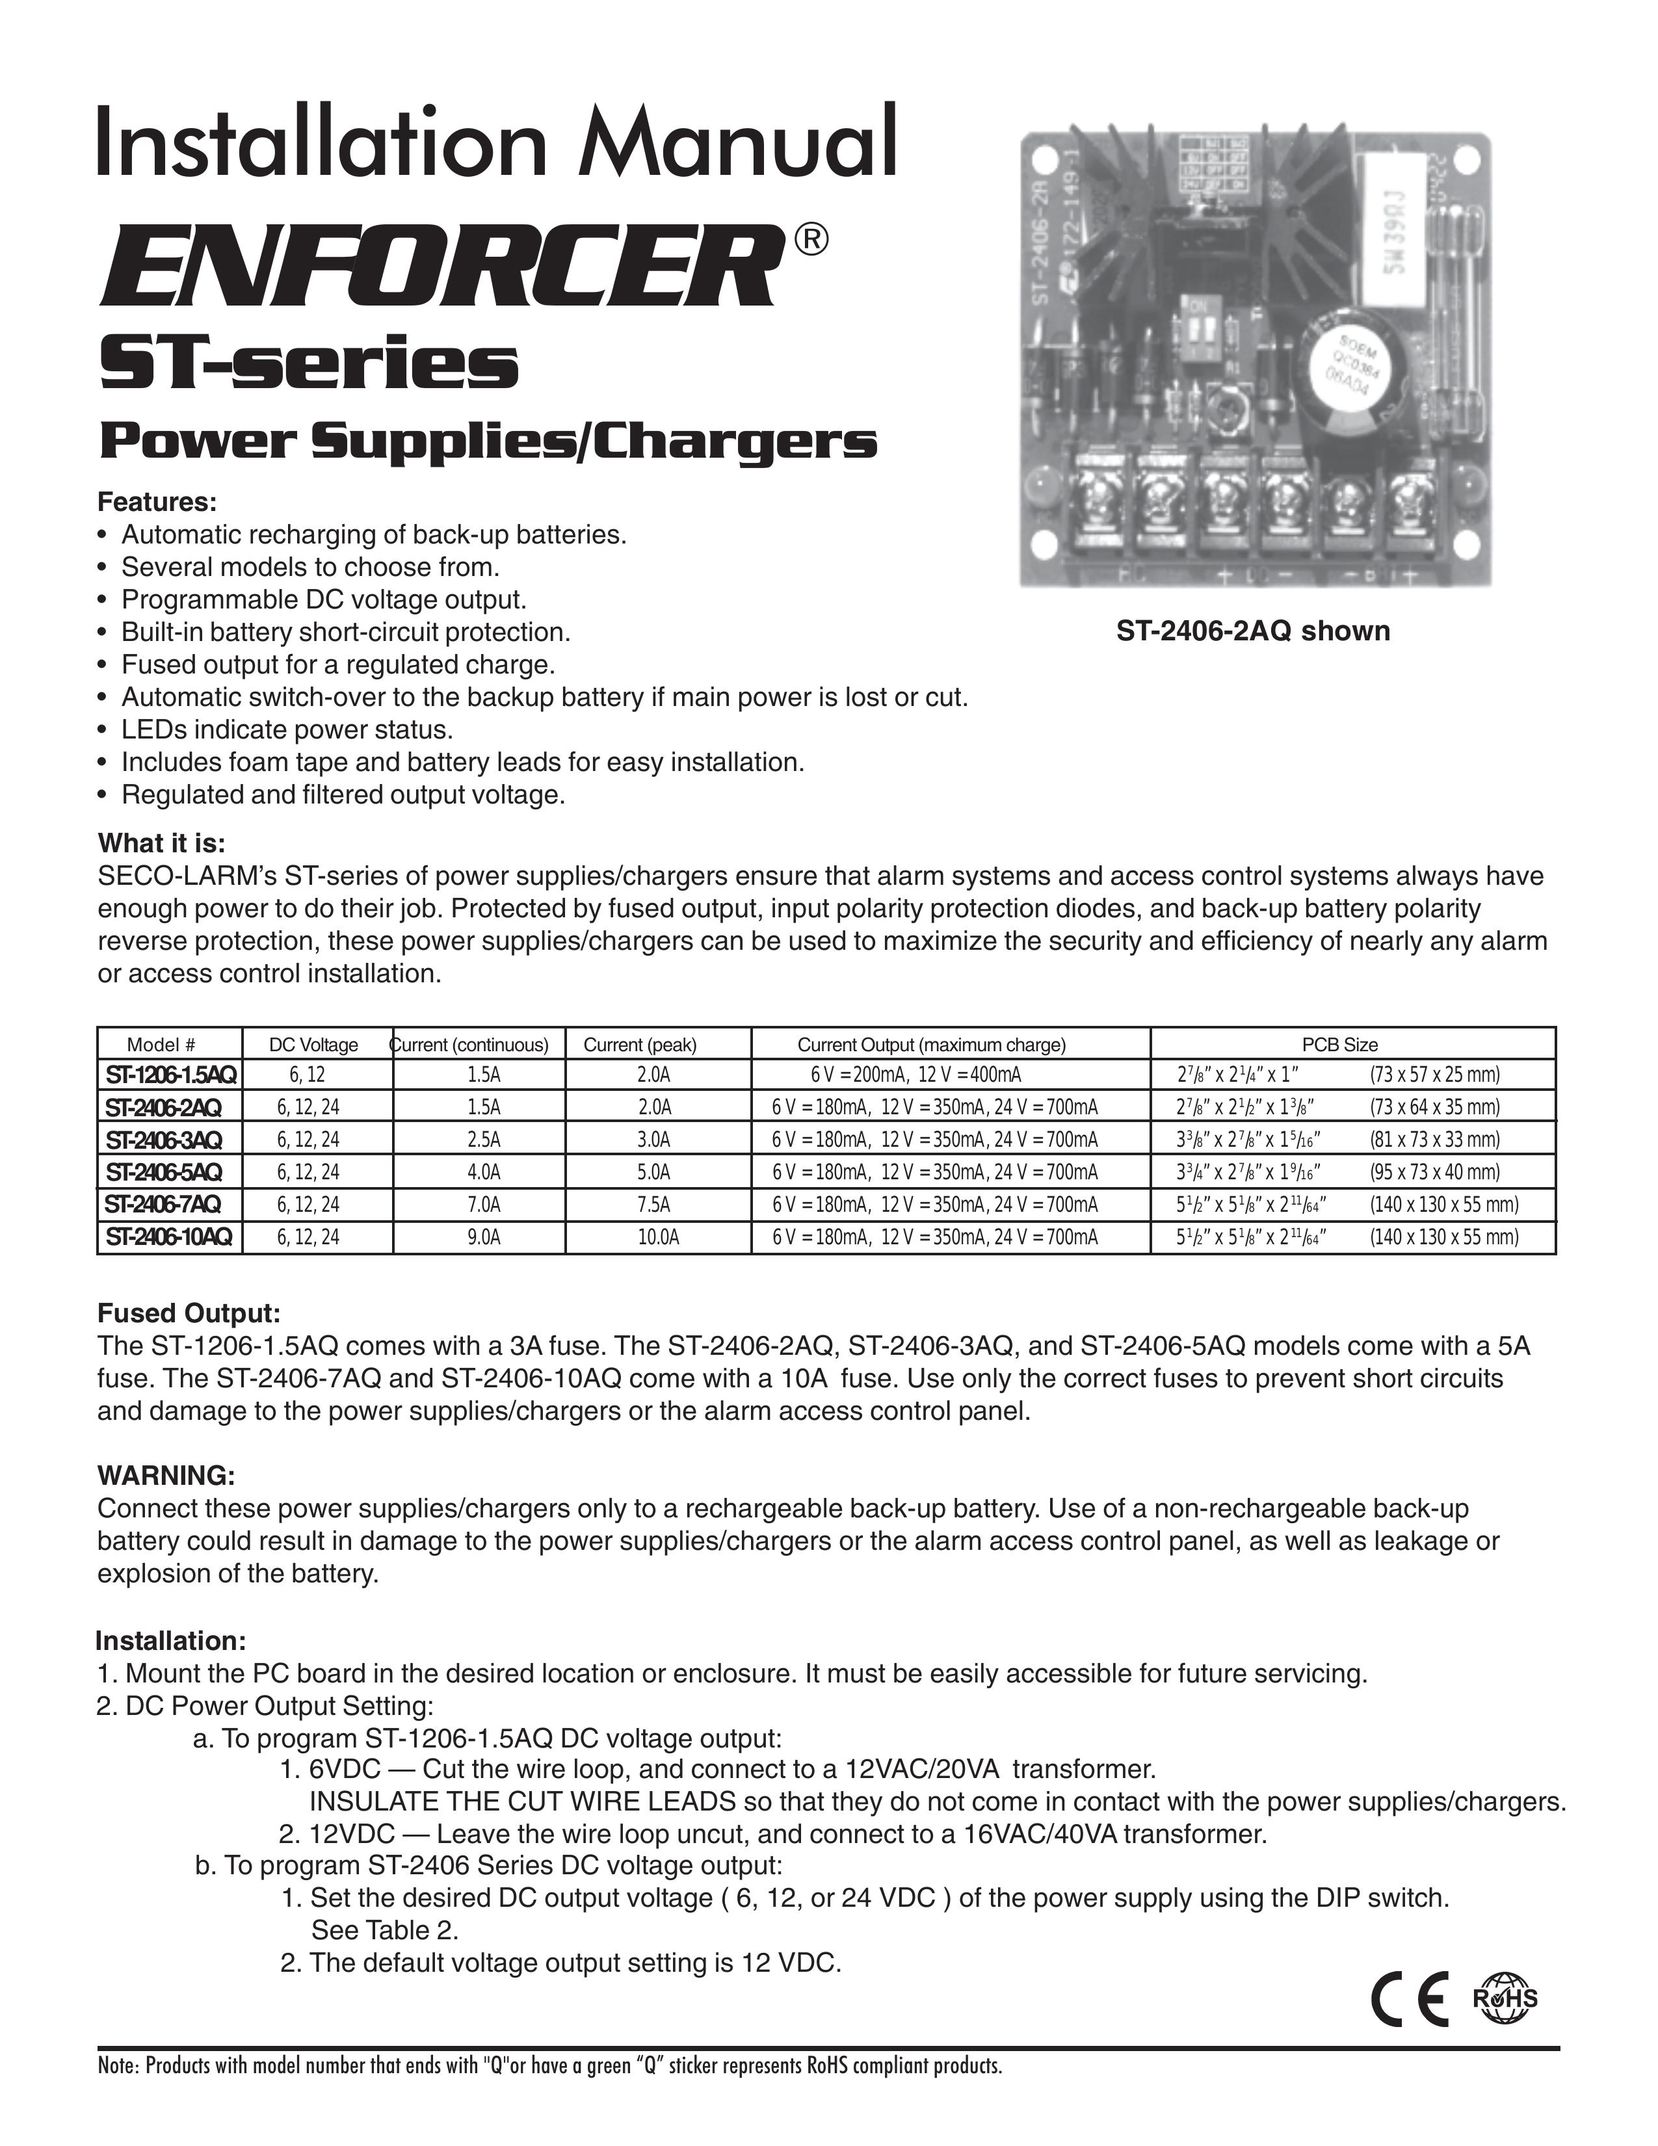 SECO-LARM USA ST-2406-5AQ Power Supply User Manual